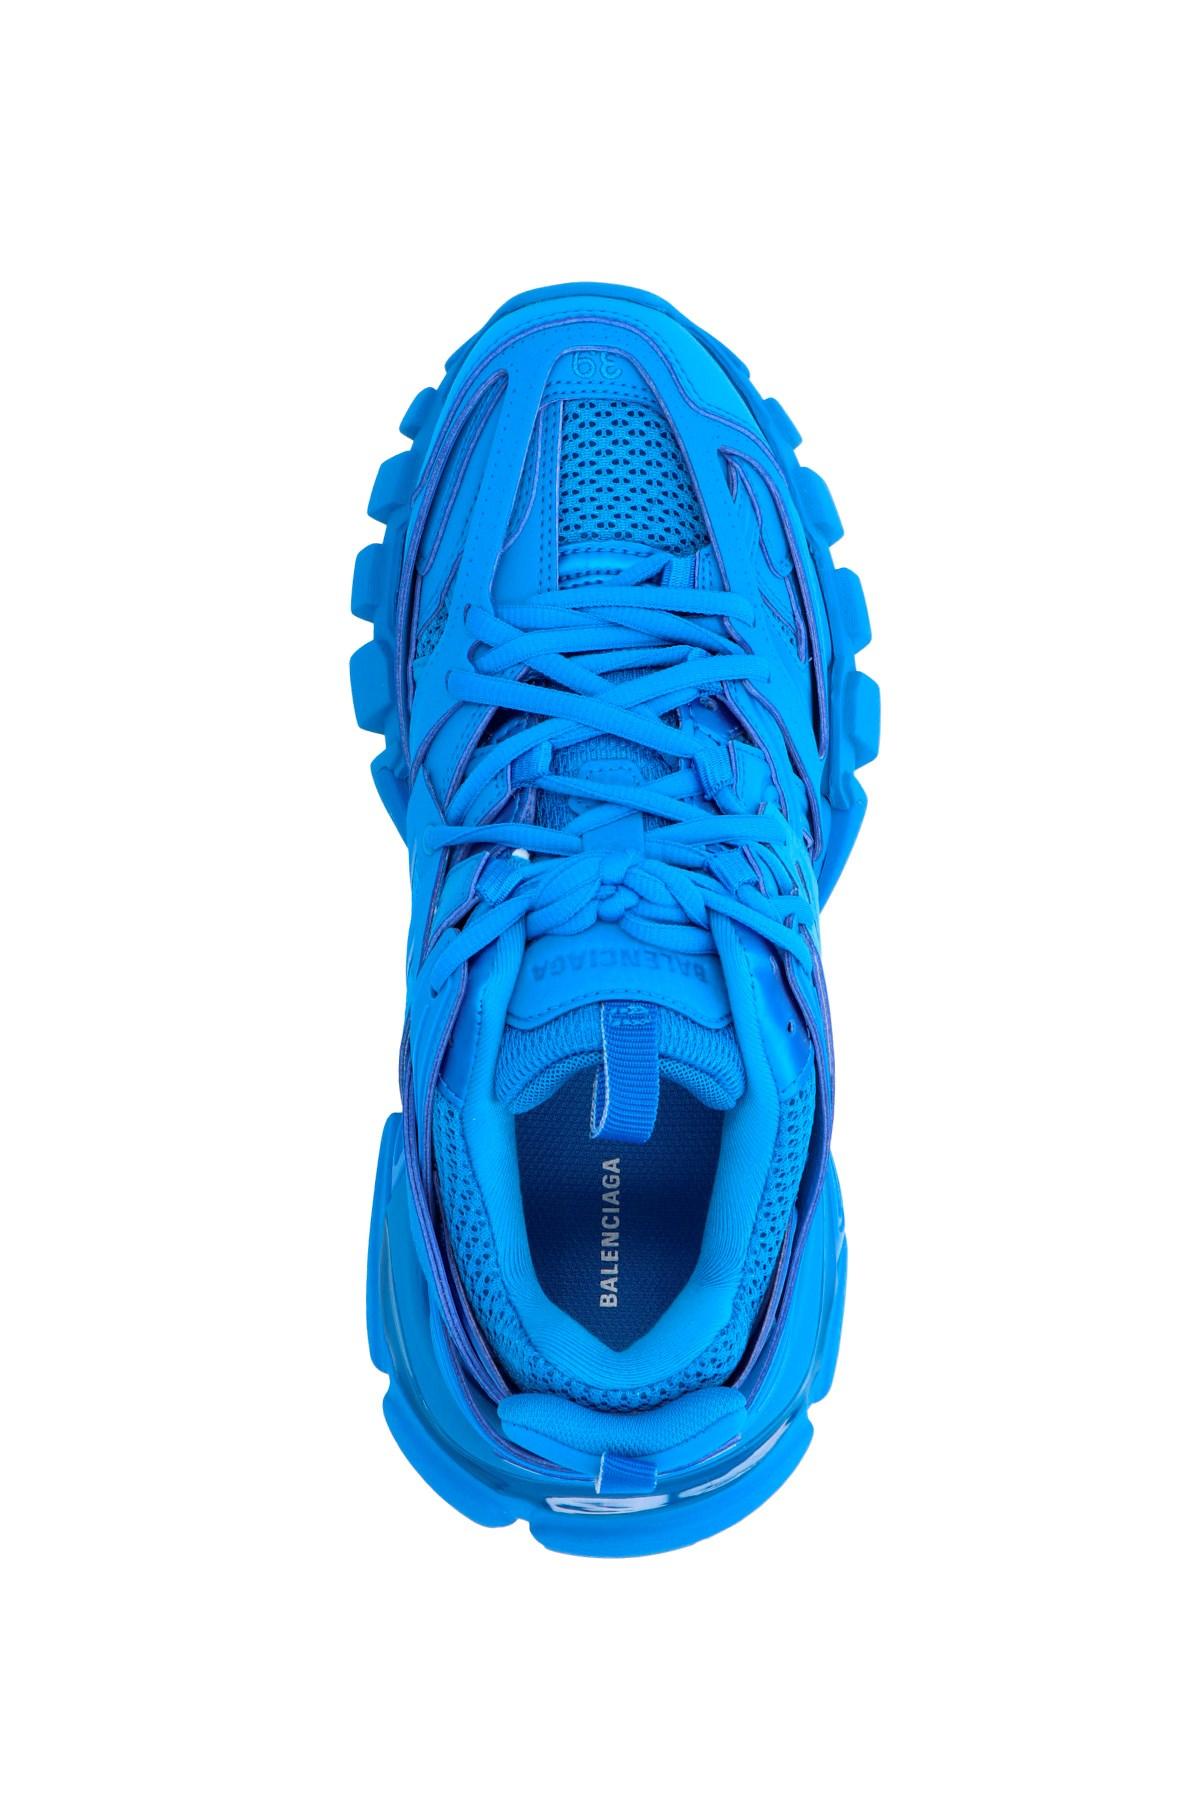 balenciaga track sneakers blue Off 66% - www.loverethymno.com